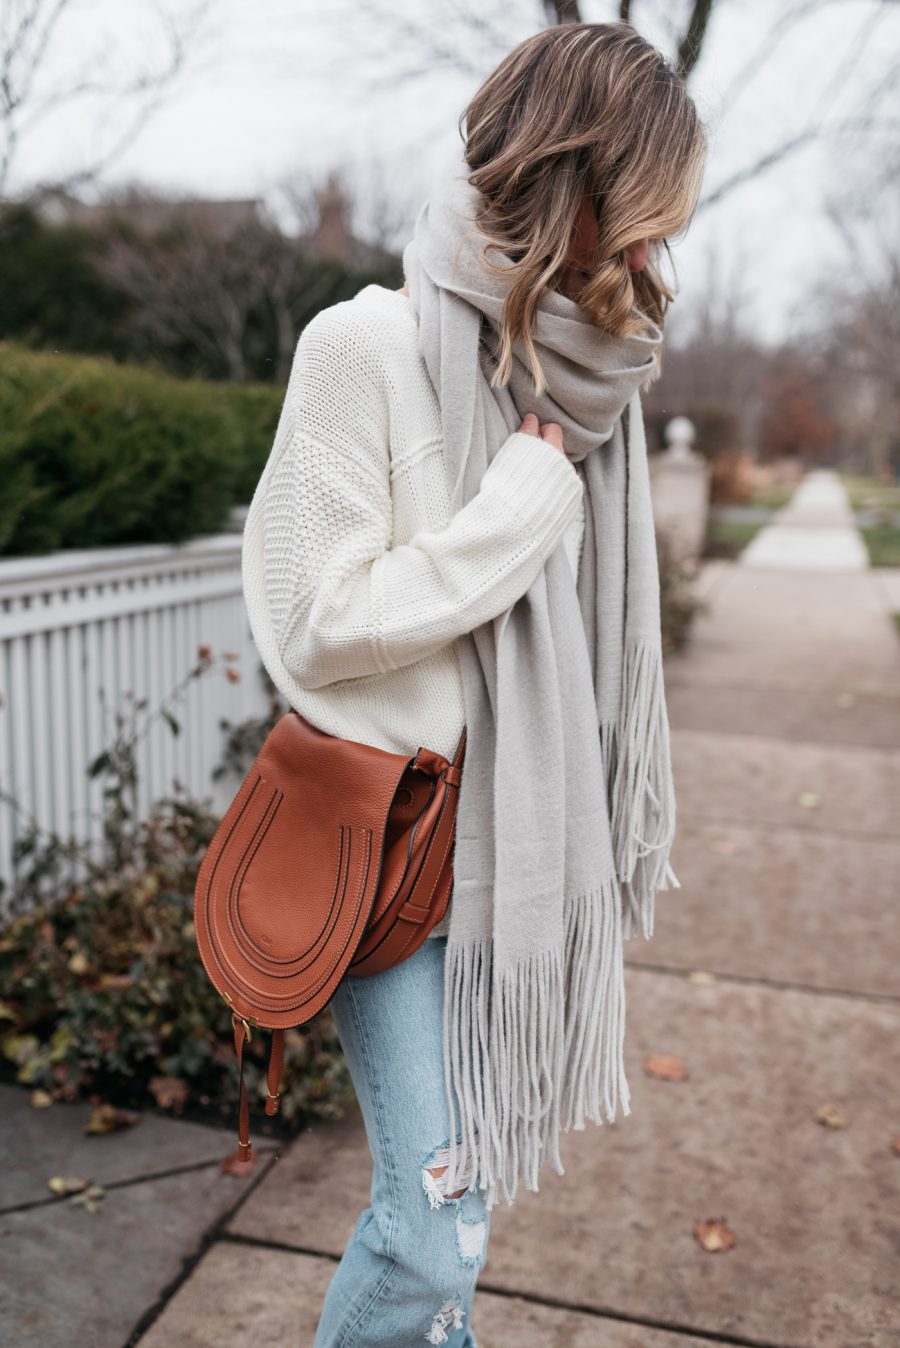 Sweater, cashmere scarf, denim, Sorel winter boots